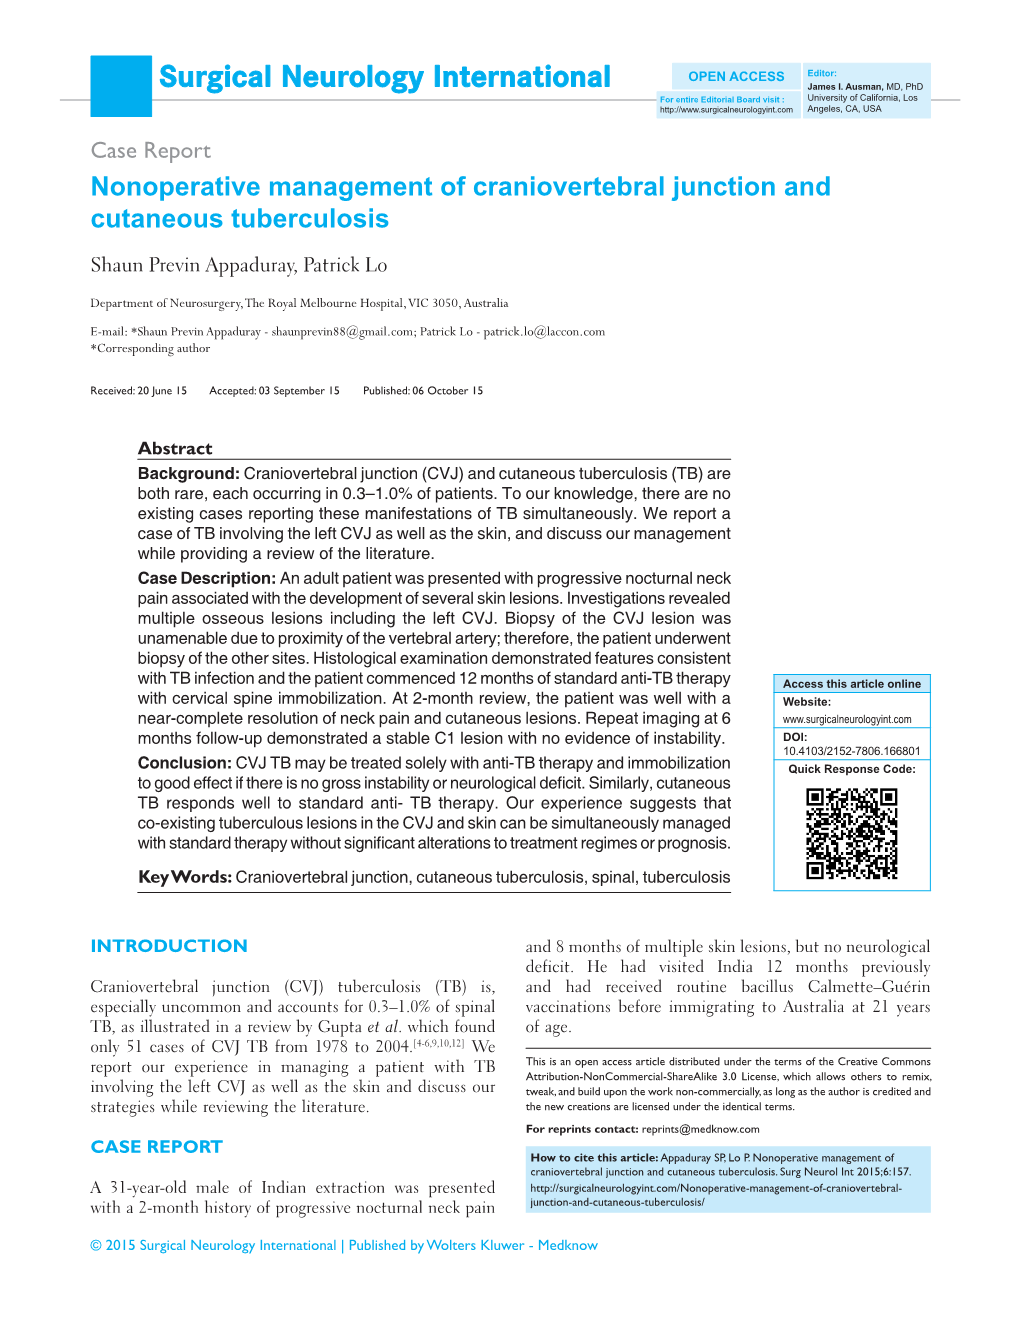 Nonoperative Management of Craniovertebral Junction and Cutaneous Tuberculosis Shaun Previn Appaduray, Patrick Lo